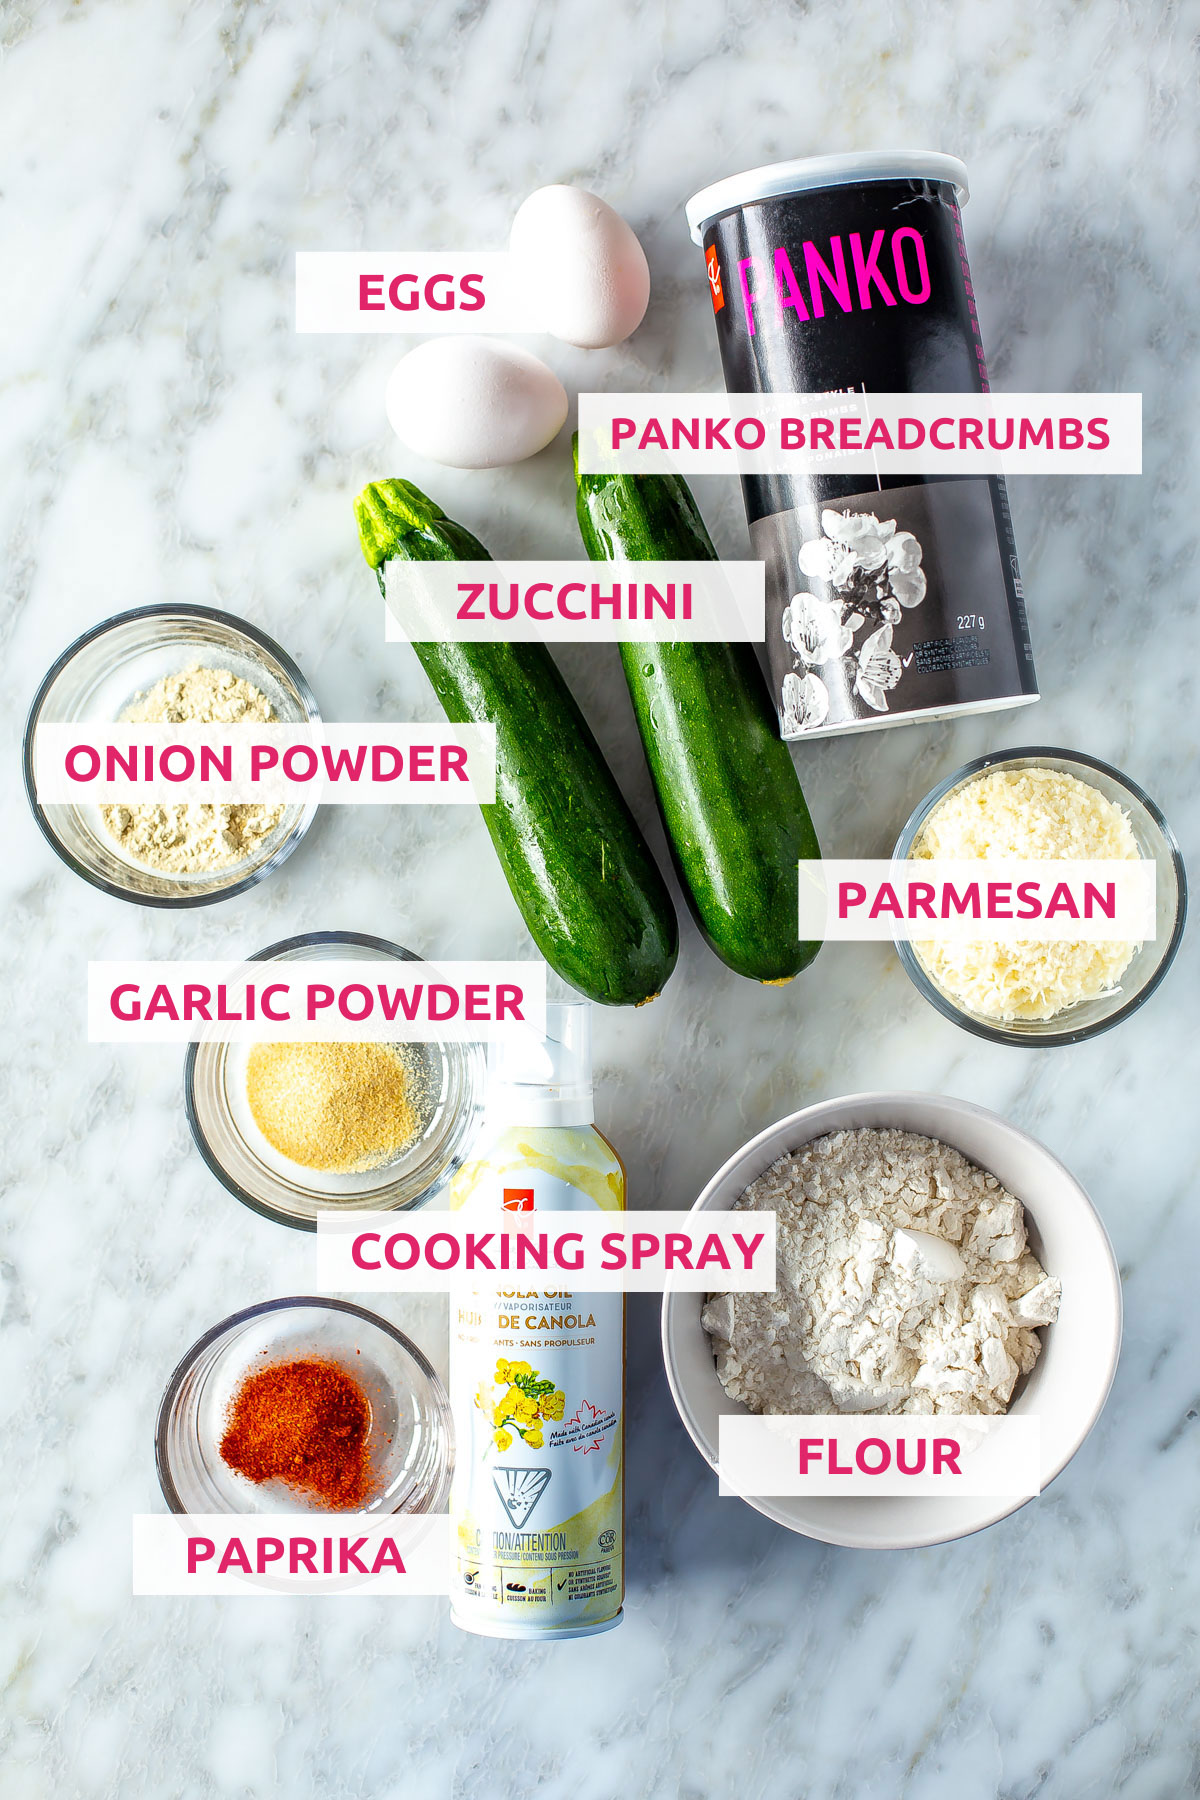 Ingredients for Air Fryer Zucchini Fries: panko breadcrumbs, eggs, zucchini, onion powder, garlic powder, parmesan, cooking spray, flour and paprika.